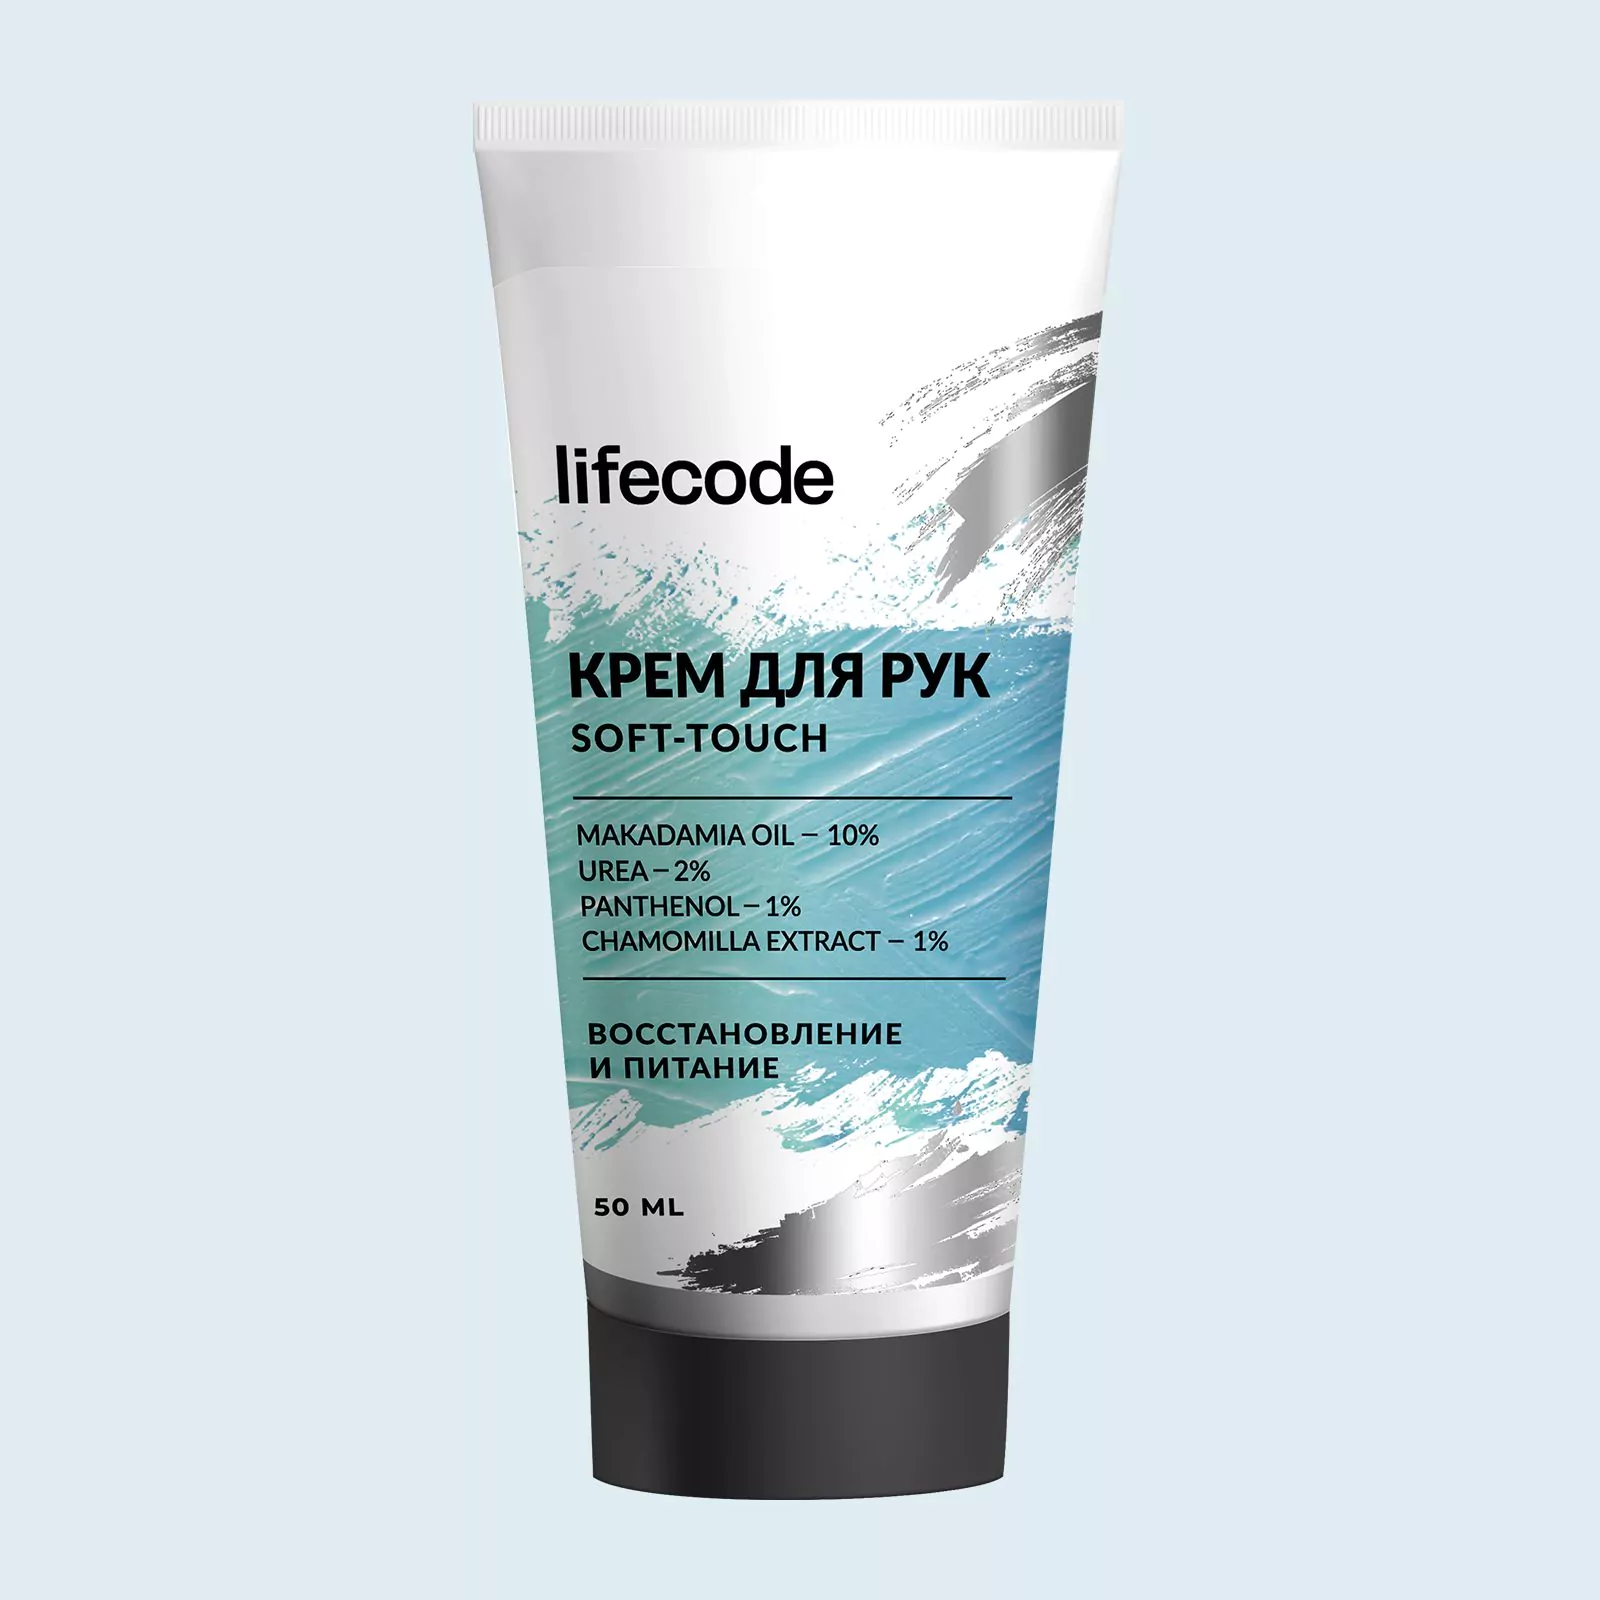 Lifecode, крем для рук soft-touch